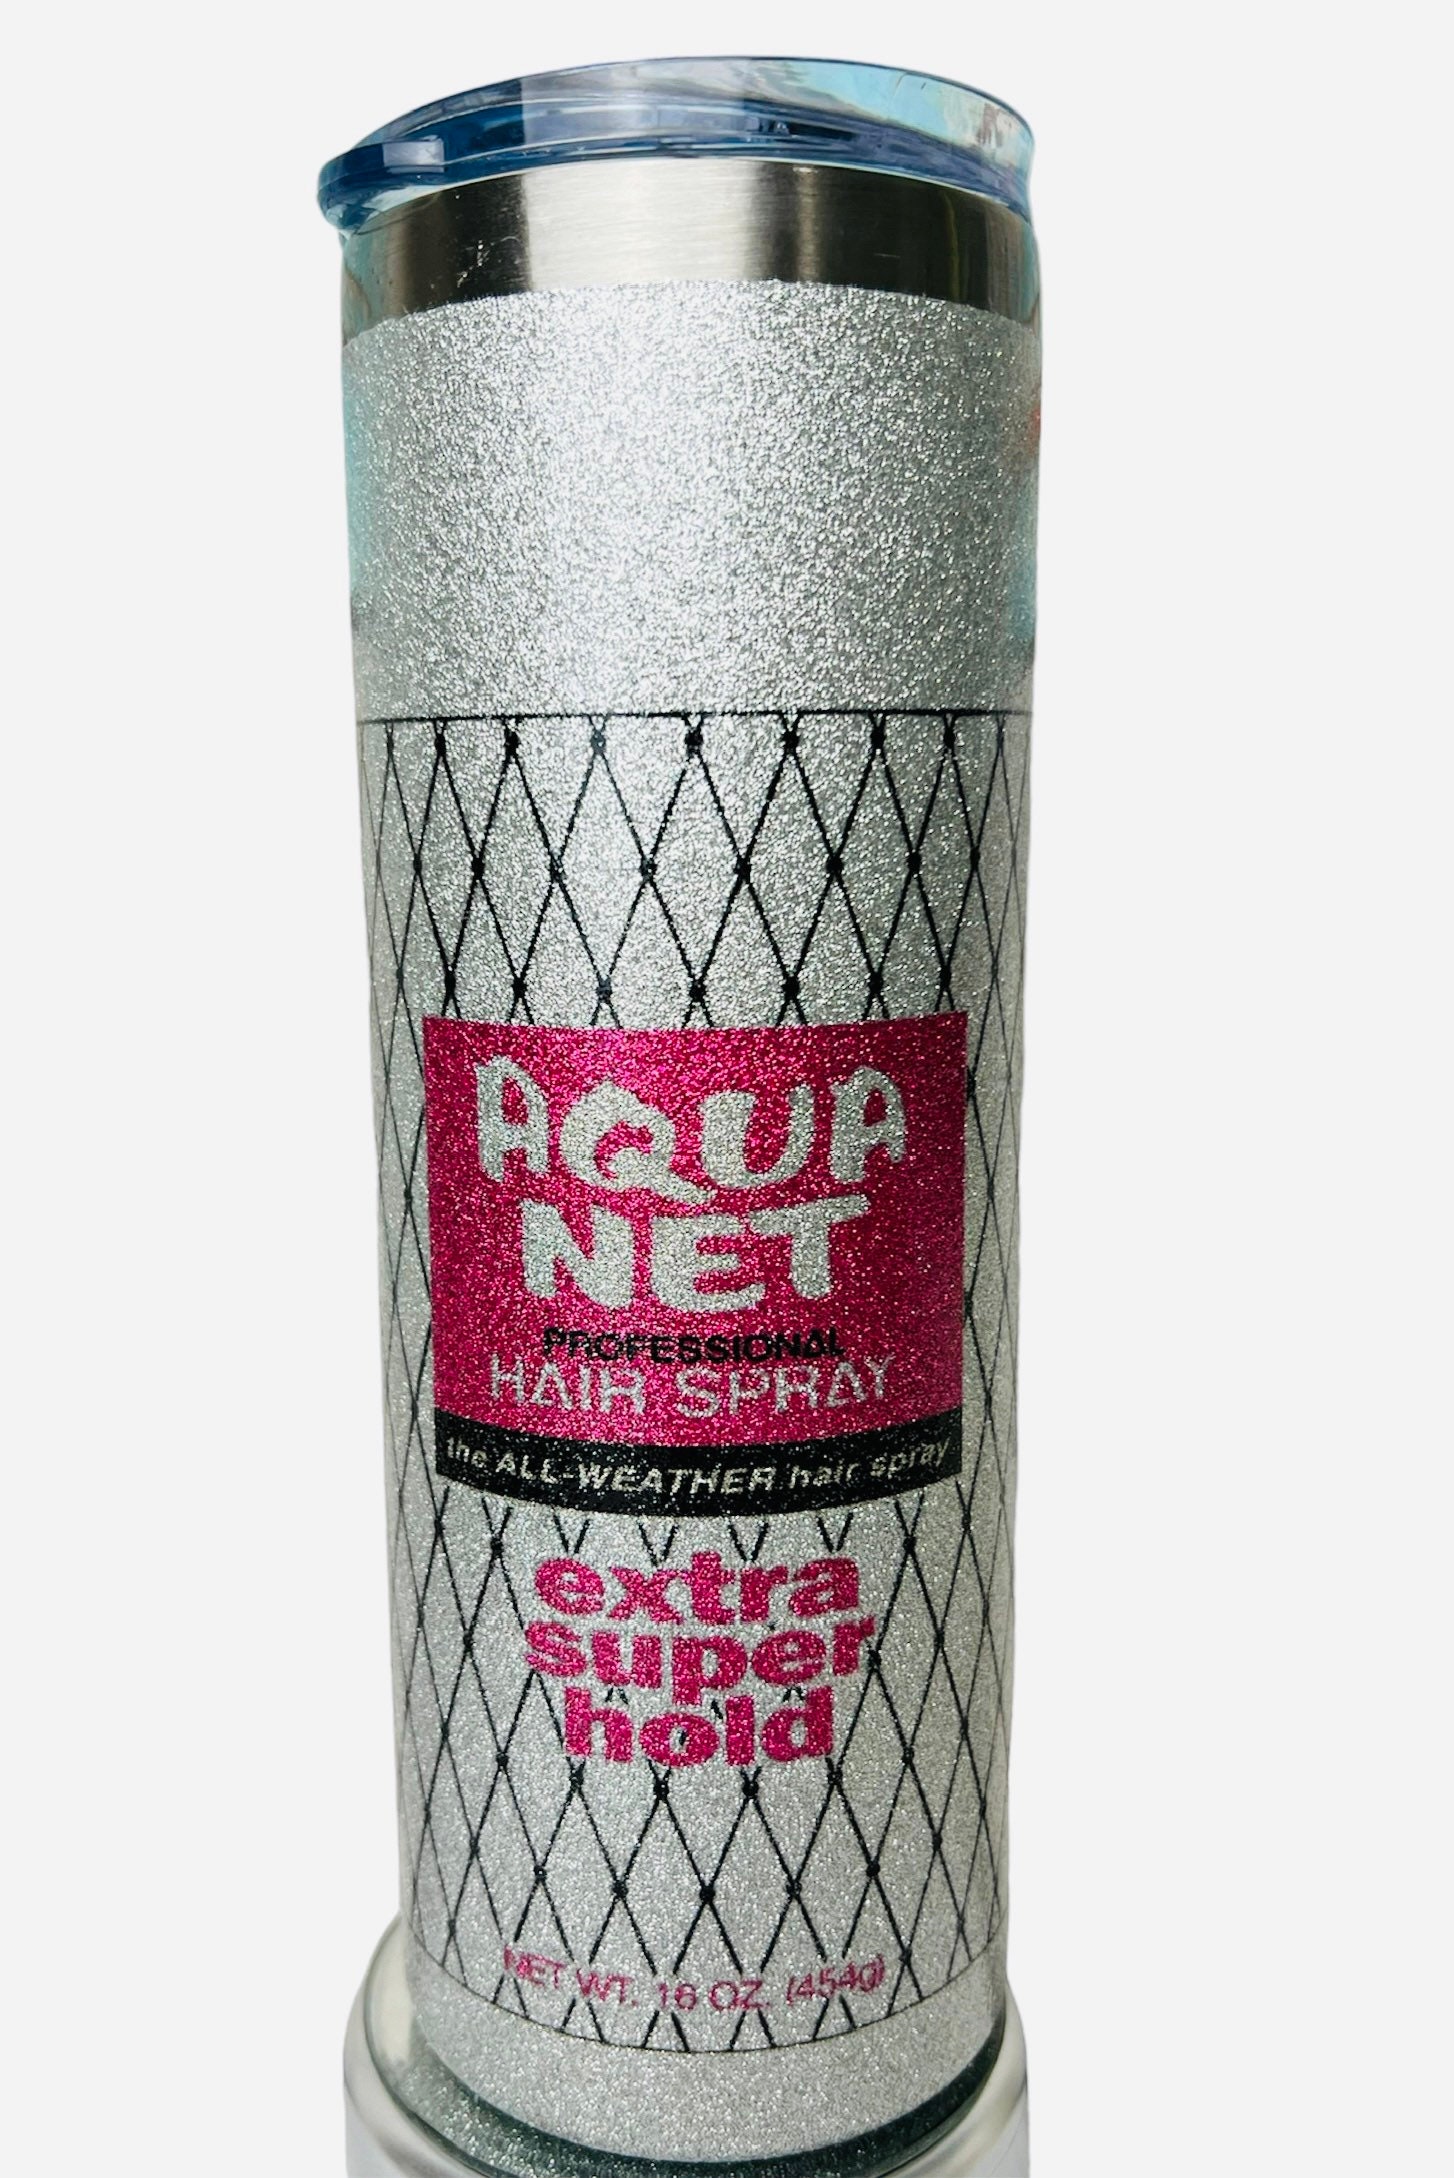 Free Name Added Aqua Net Aquanet Tumbler Hairspray Design 20 Oz Double  Walled Skinny Tumbler.free Name Added to Bottom Back 